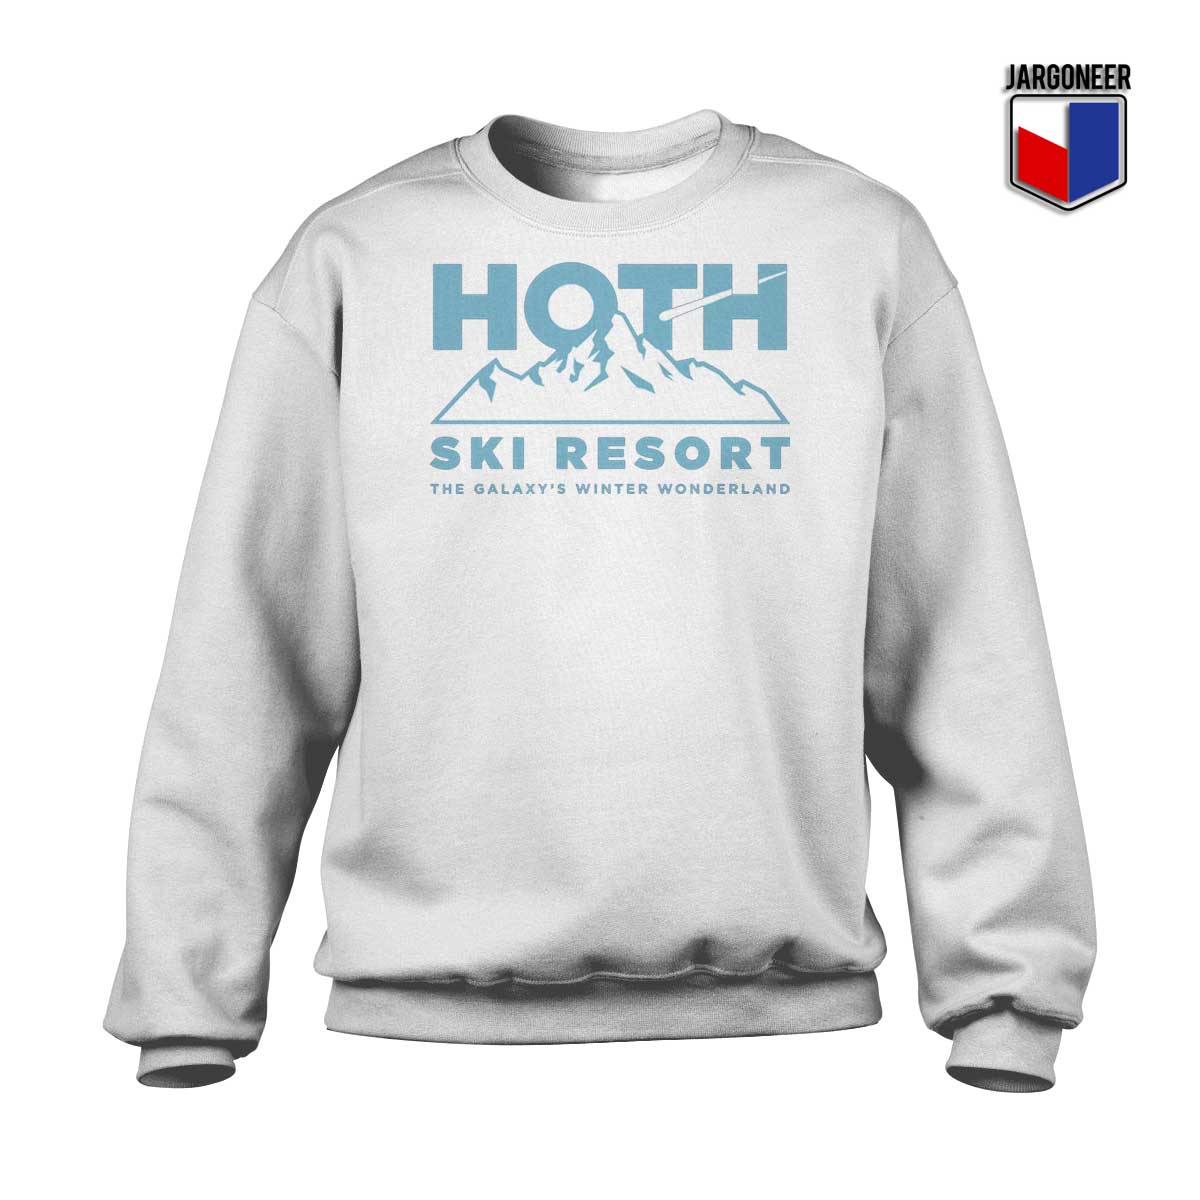 Hoth Ski Resort Sweatshirt - Shop Unique Graphic Cool Shirt Designs